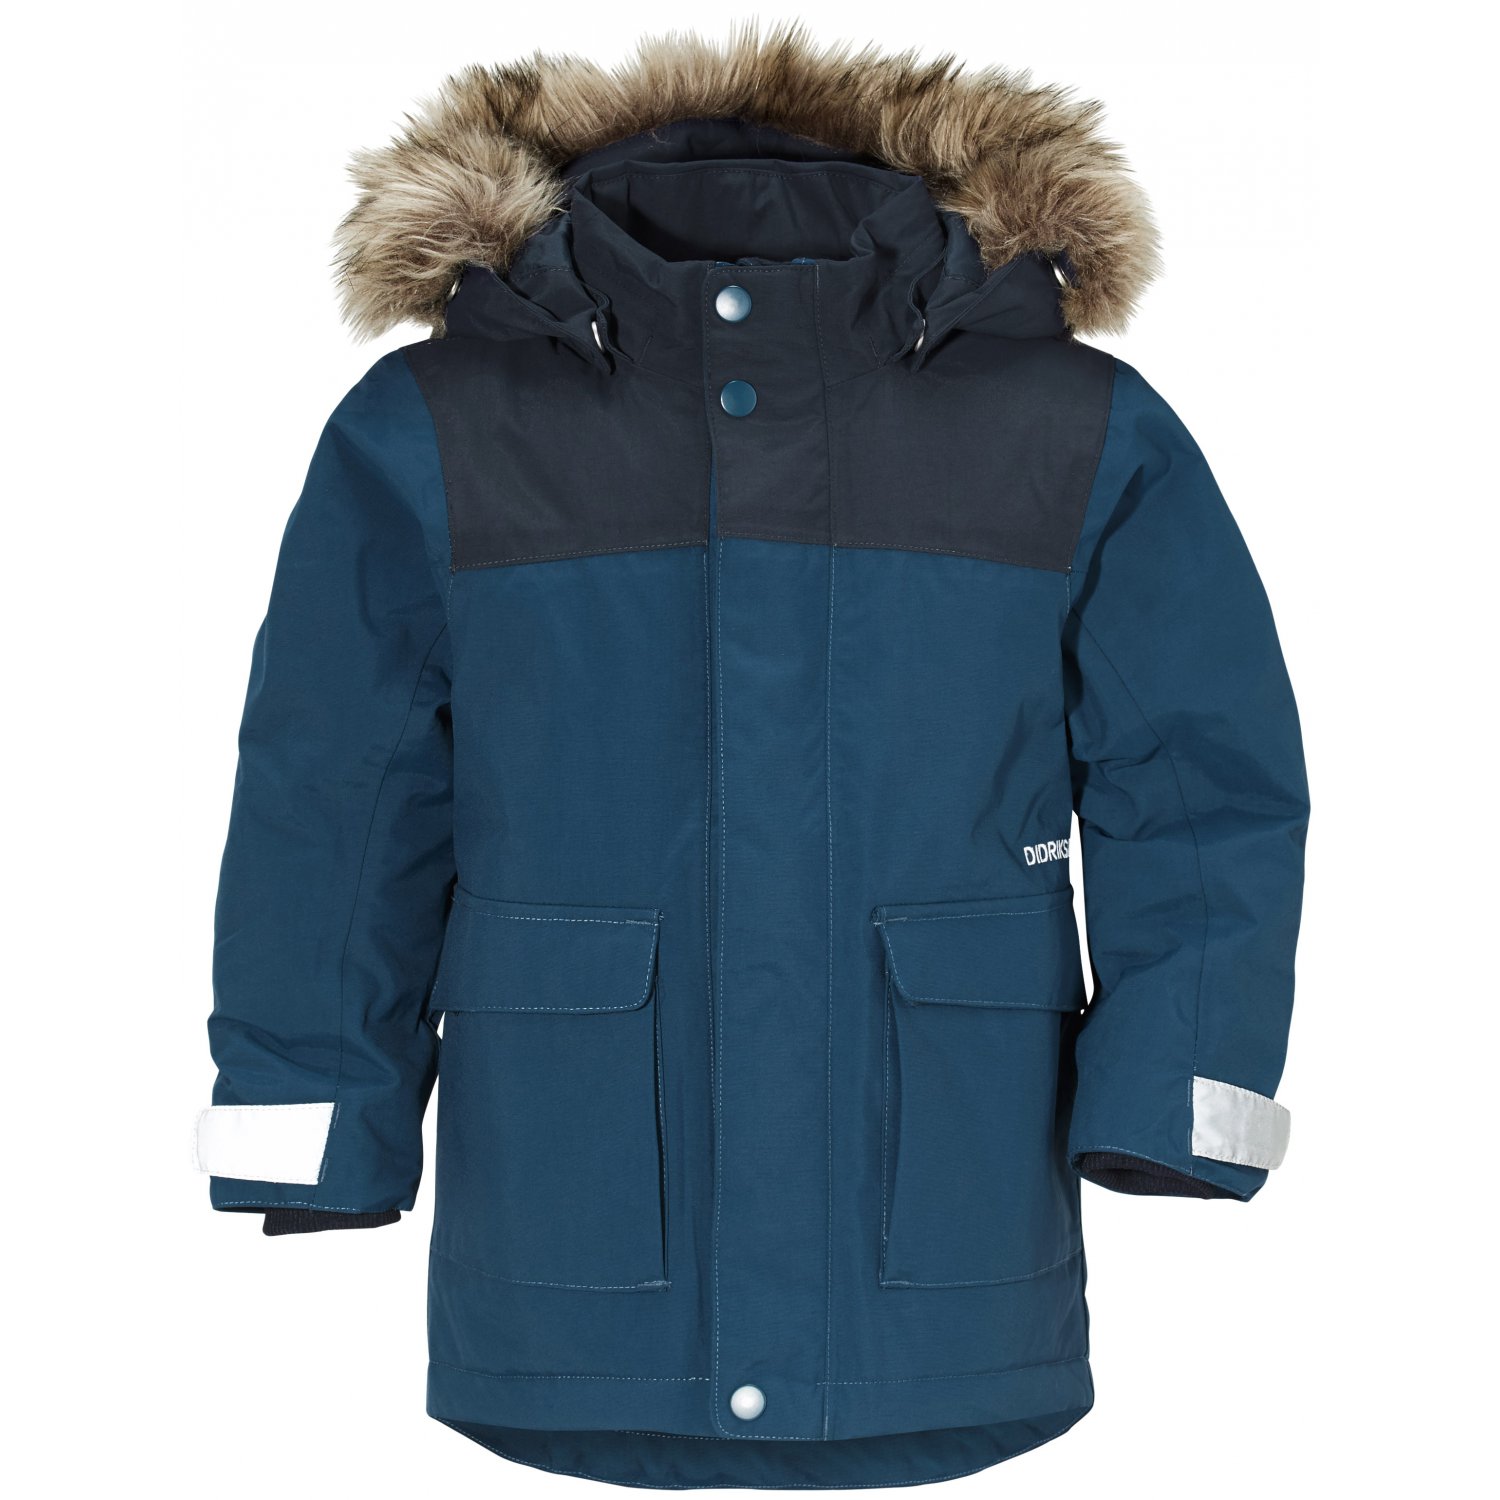 Куртка KURE PARKA (синий ураган) Didriksons 502679 343 для мальчиков:  купить в Москве куртка зима Didriksons